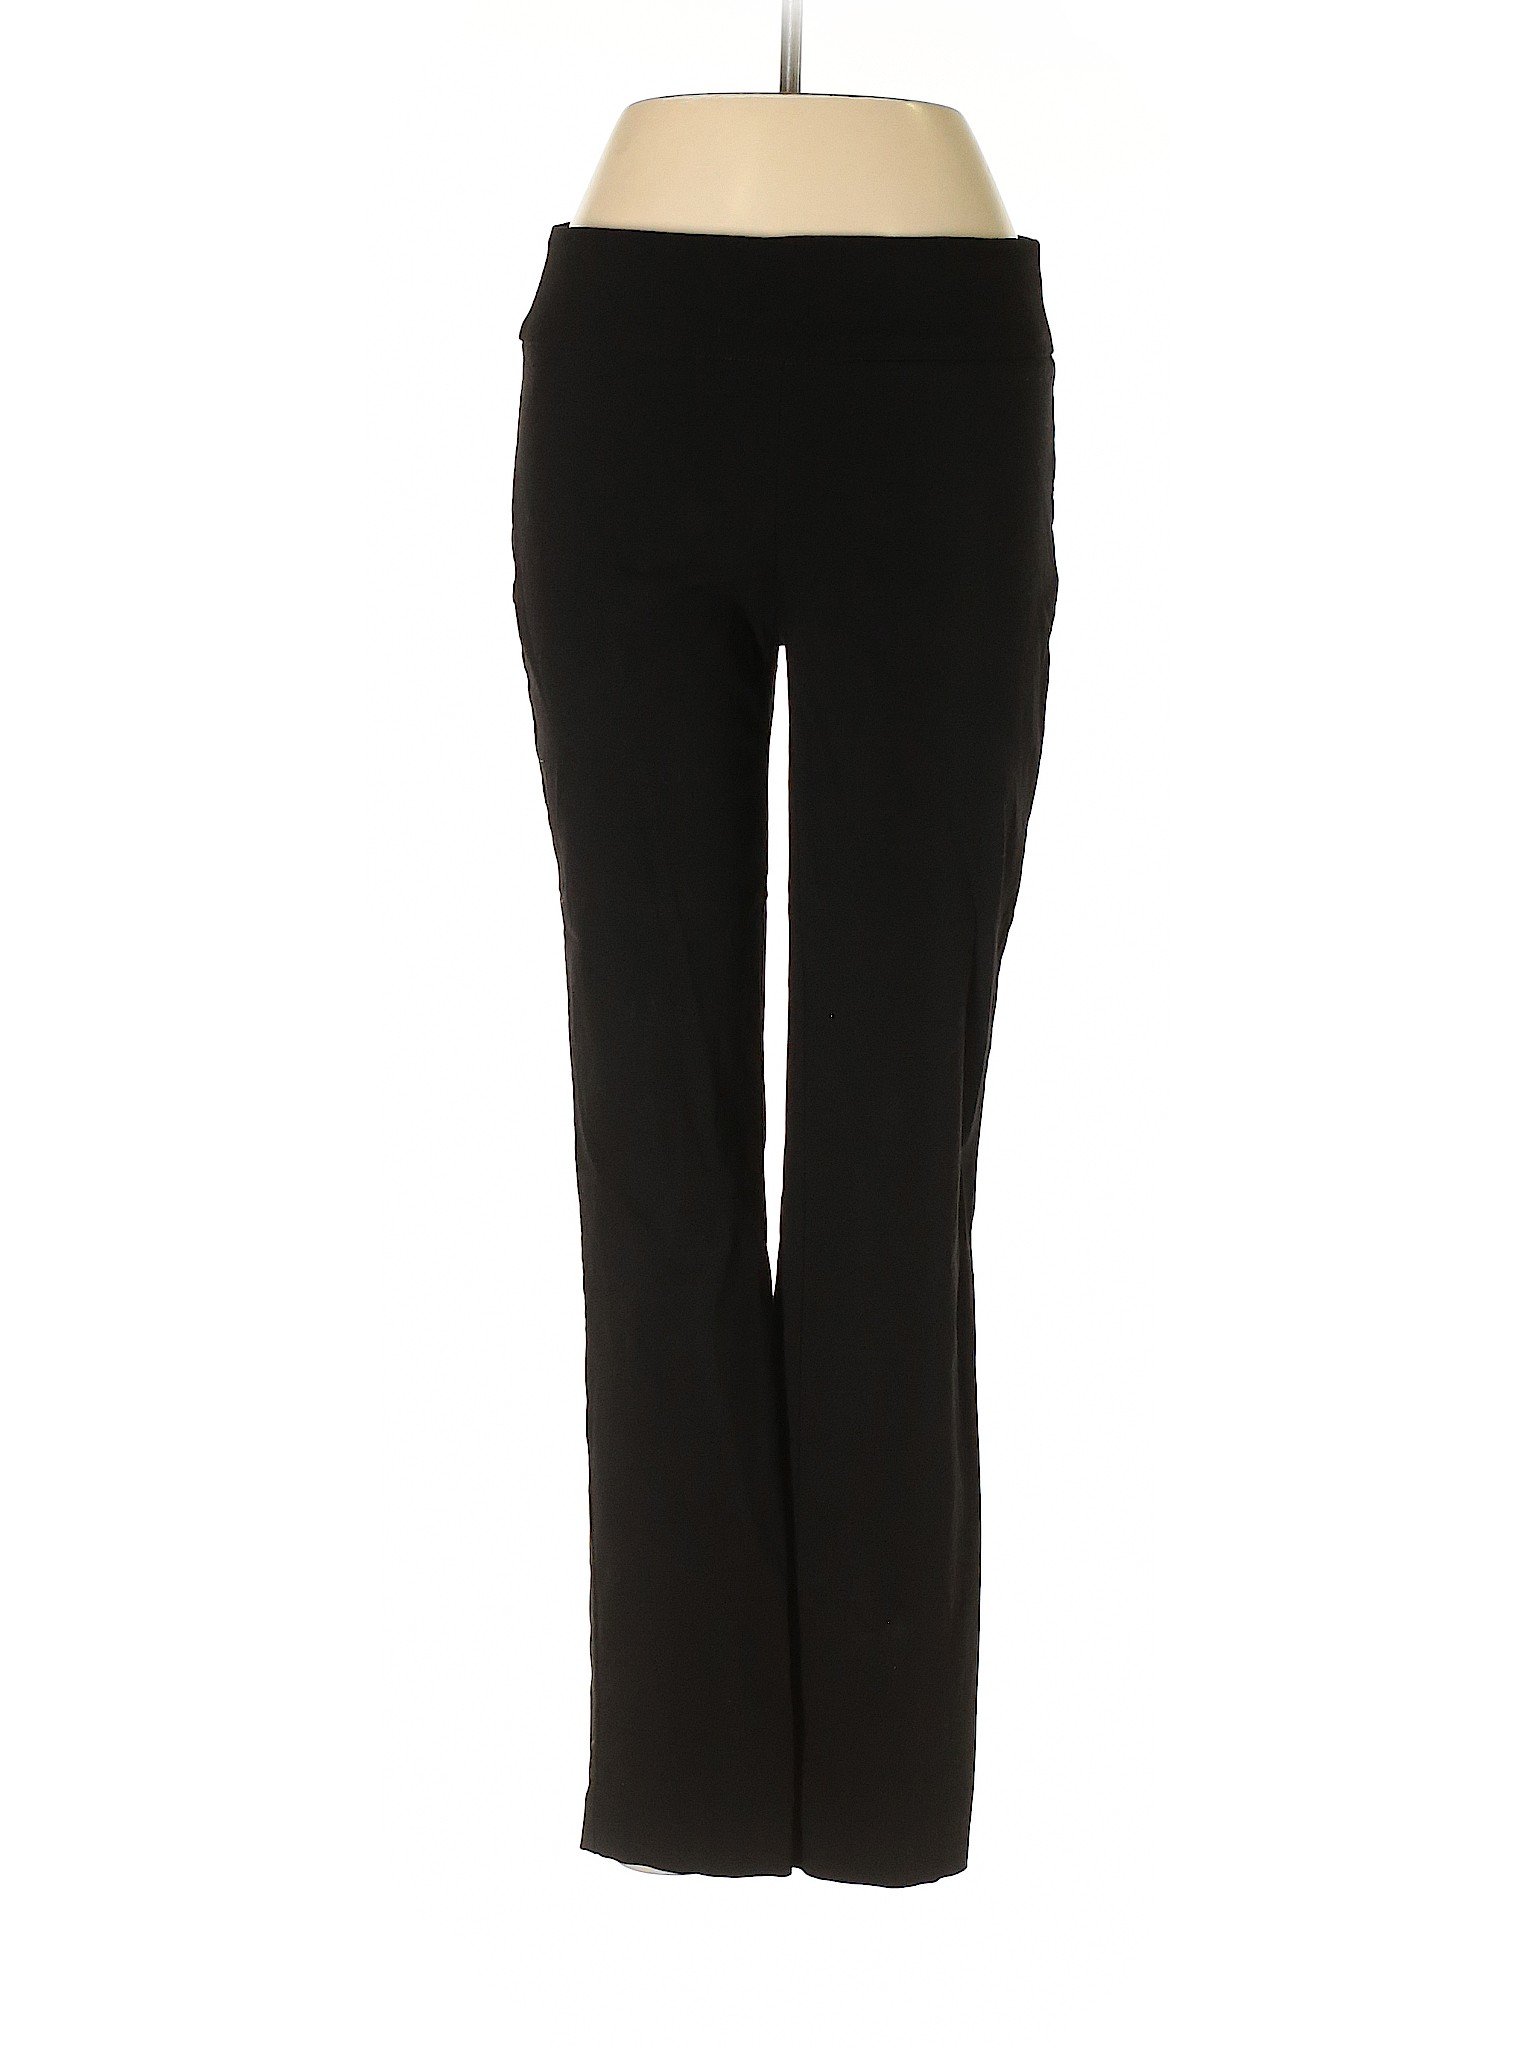 Hilary Radley Women Black Casual Pants 4 | eBay